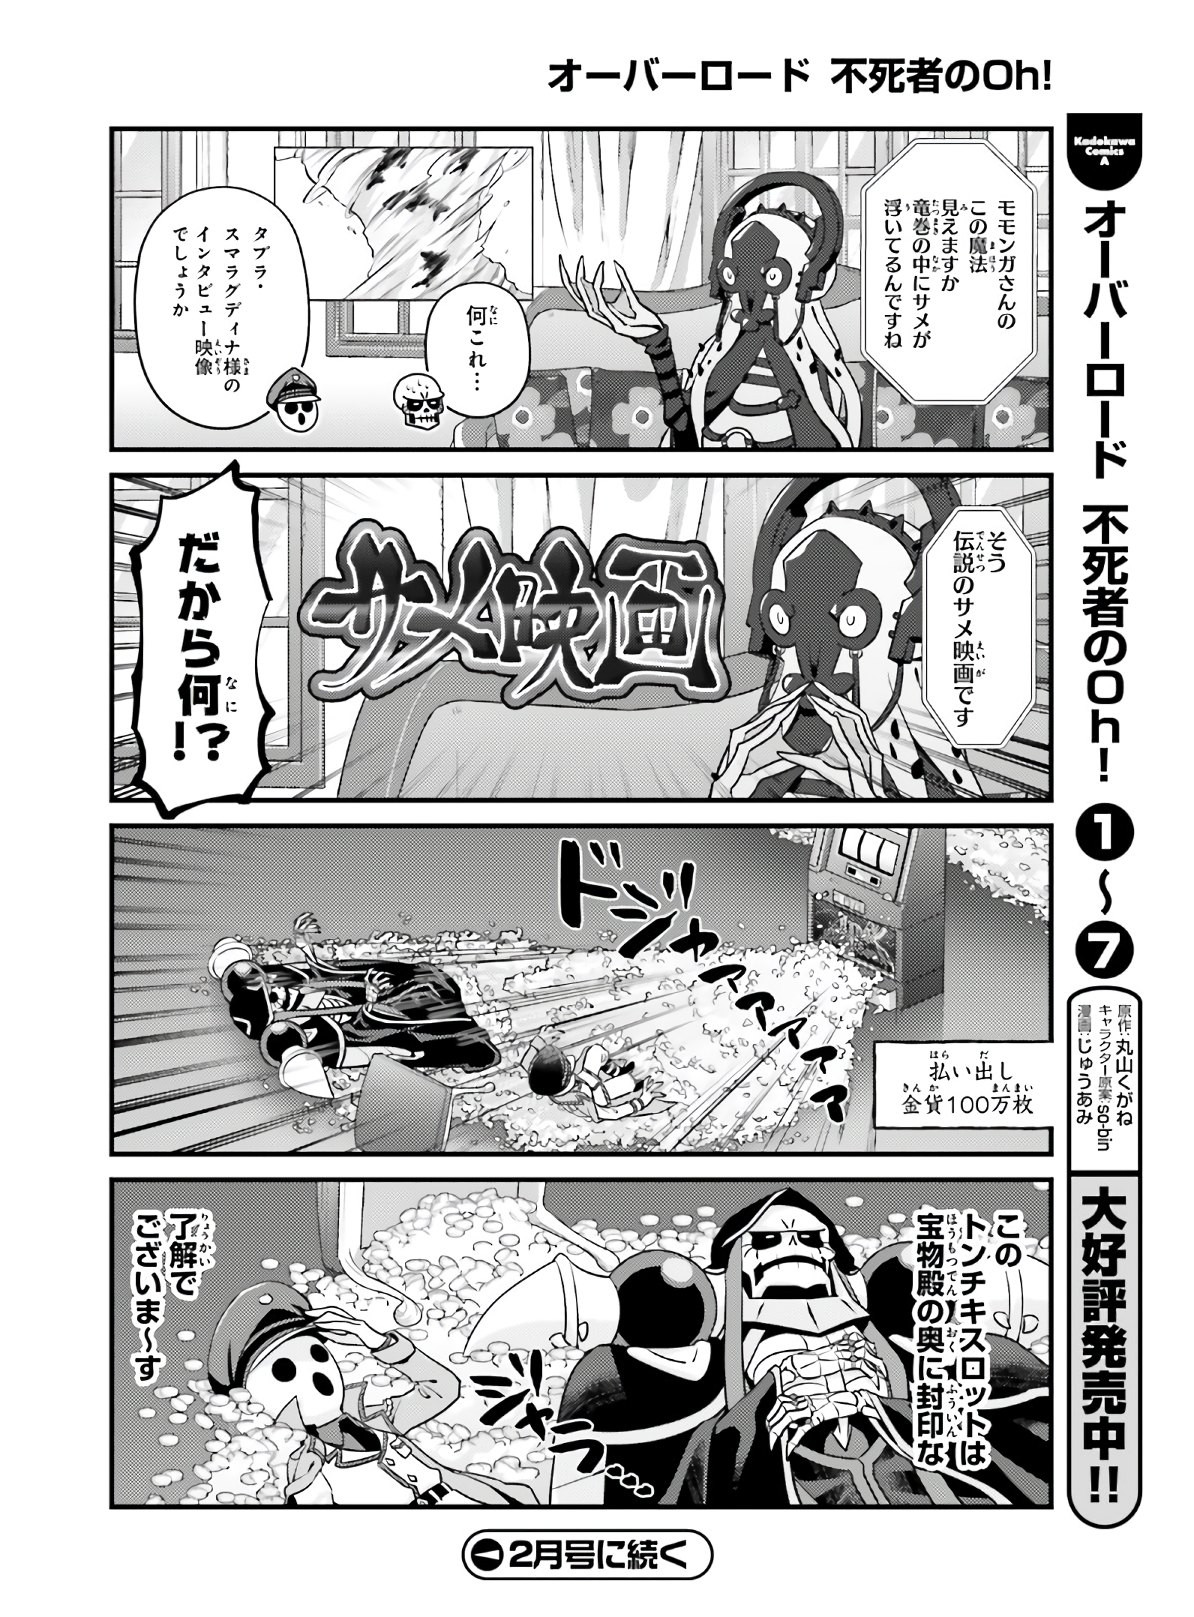 Overlord-Fushisha-no-Oh - Chapter 44 - Page 20